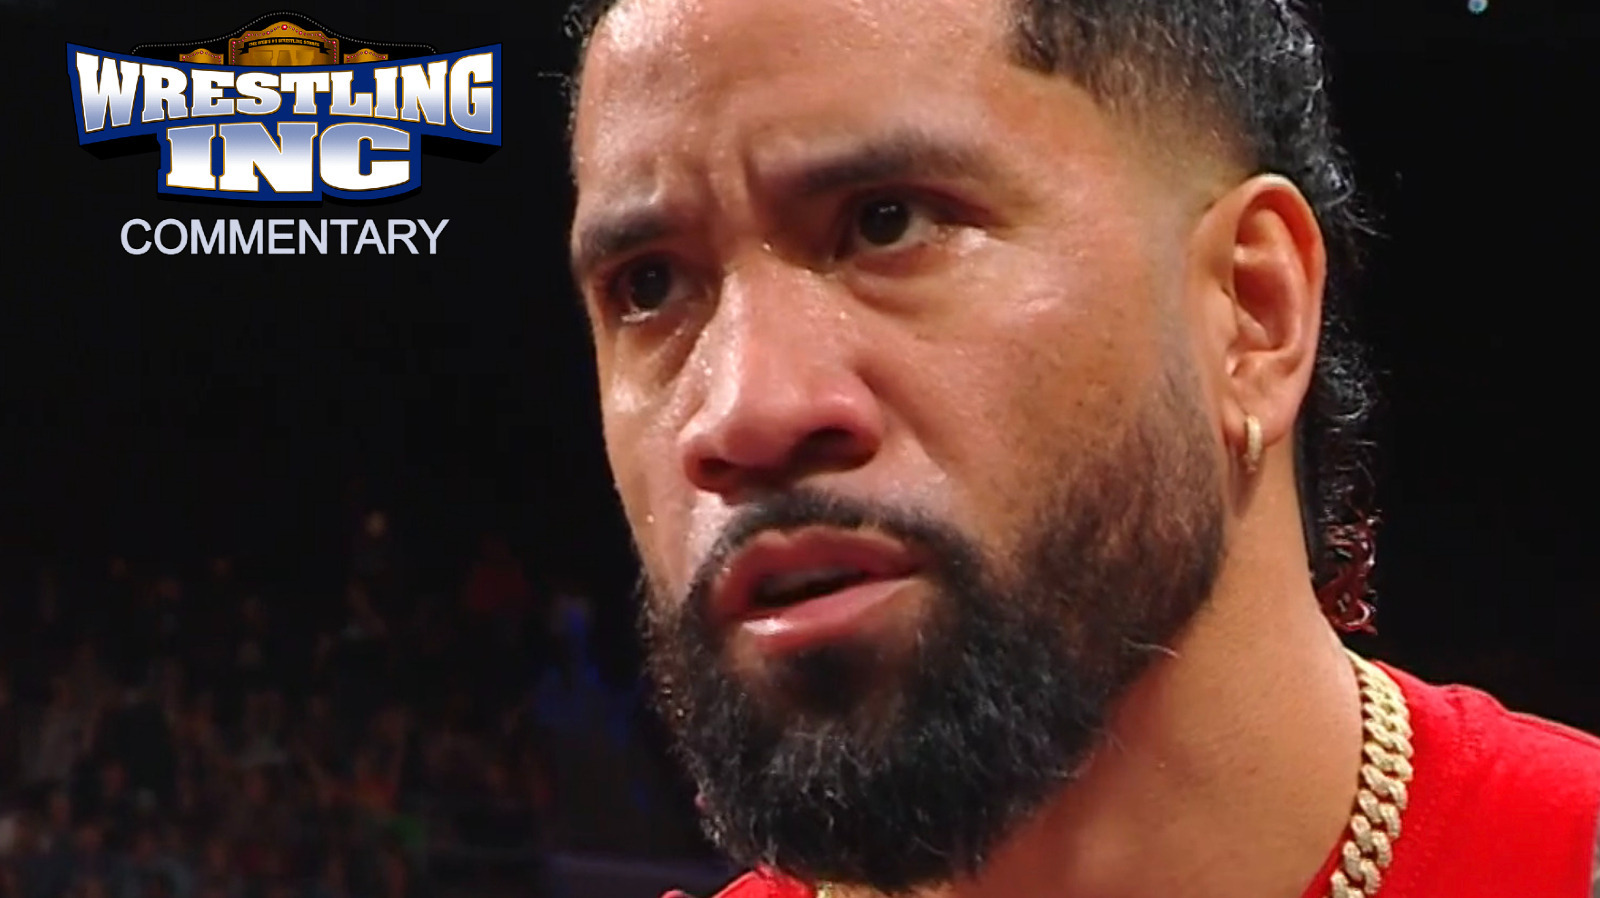 Jey Uso Turning On Sami Zayn Was Inevitable, But Risks Derailing WWE’s Bloodline Story – Wrestling Inc.